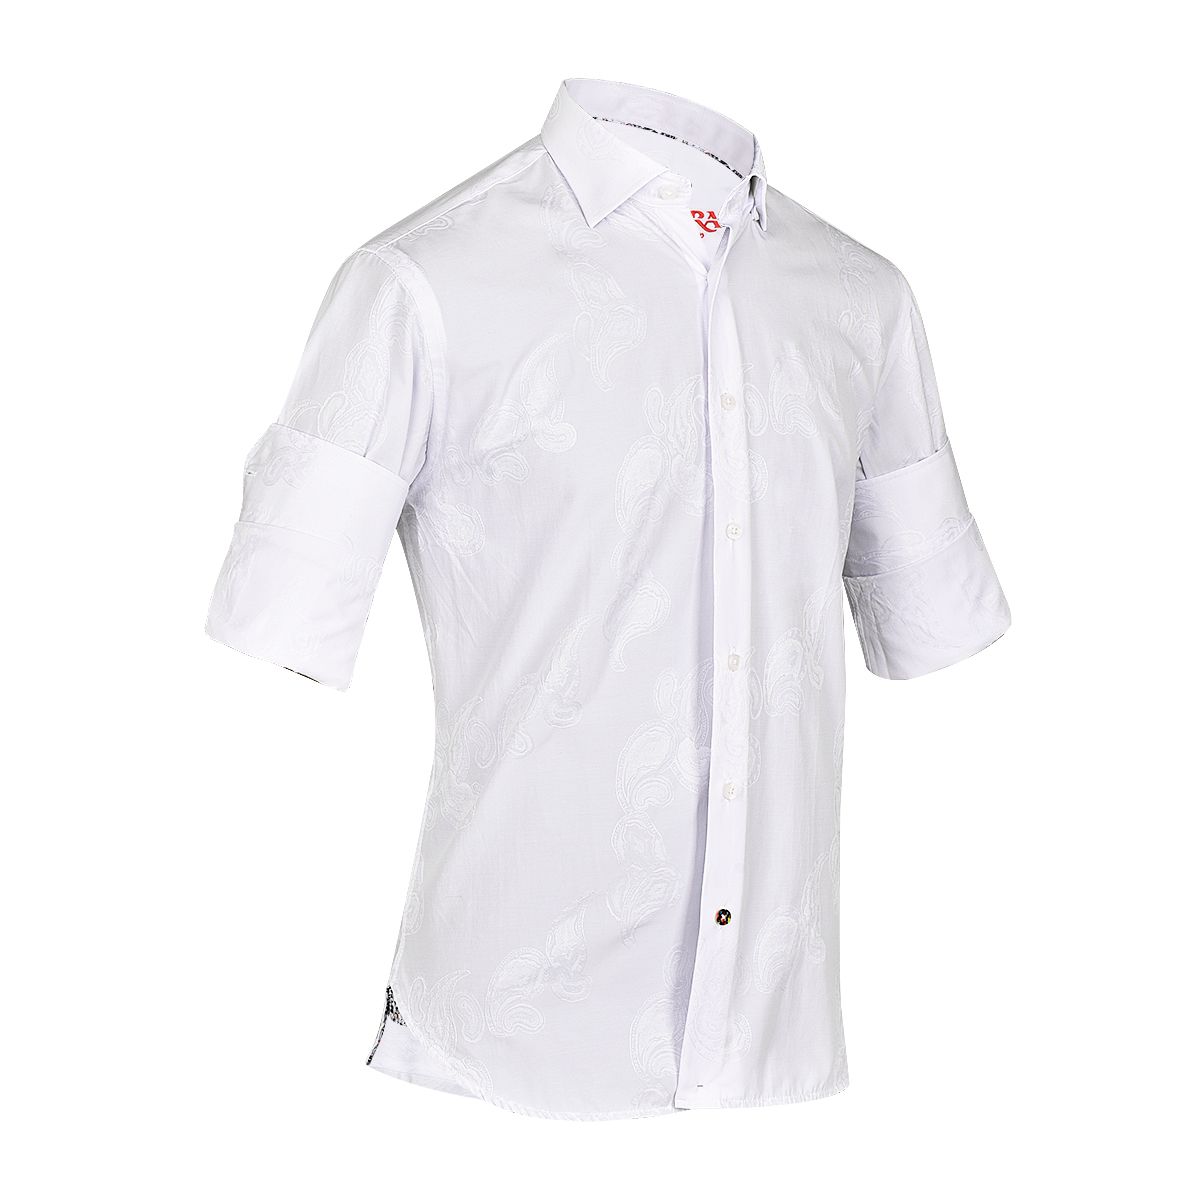 CM04625 - Cuadra white casual dress long sleeve cotton shirt for men-CUADRA-Kuet-Cuadra-Boots